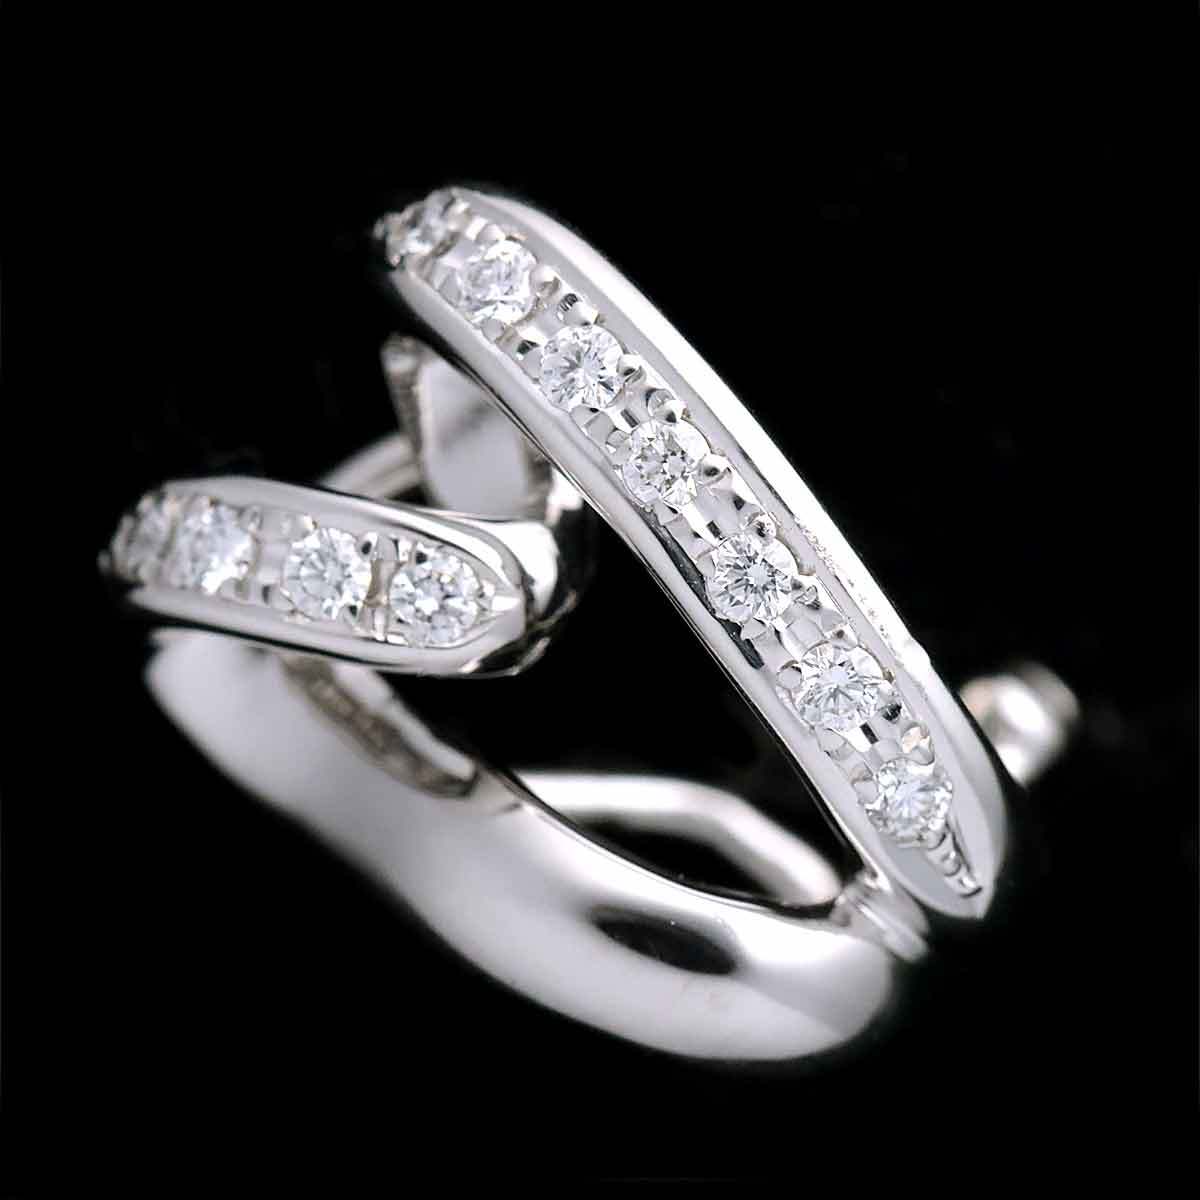 tasakiTASAKI diamond 0.11ct×2 earrings Pt platinum Tasaki Shinju Diamond Earrings 90205400